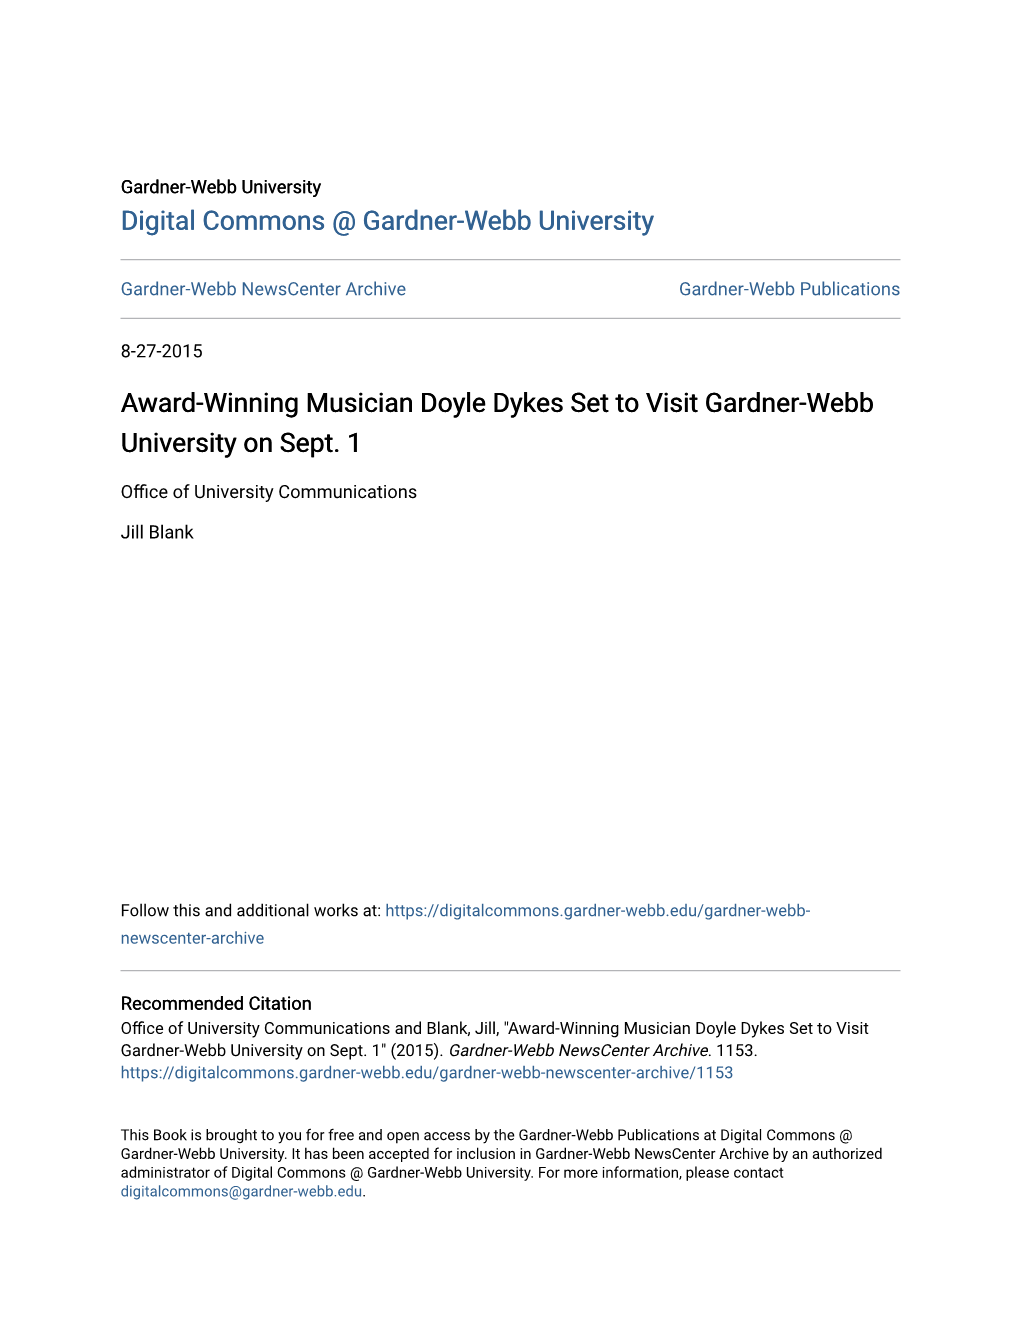 Award-Winning Musician Doyle Dykes Set to Visit Gardner-Webb University on Sept